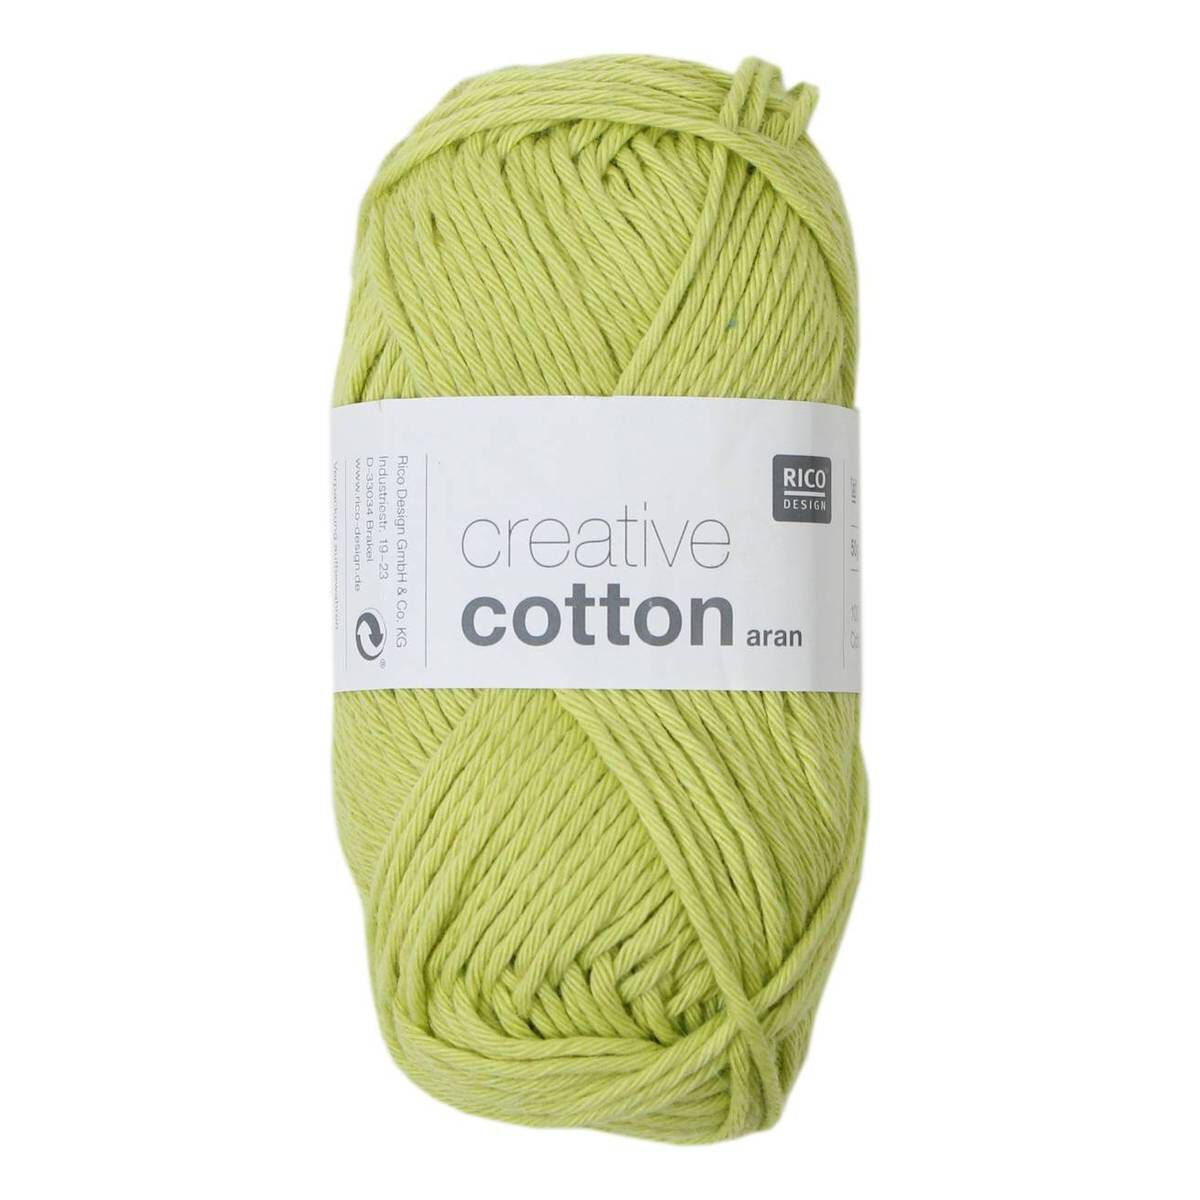 Rico Light Pistachio Creative Cotton Aran Yarn 50 g | Hobbycraft